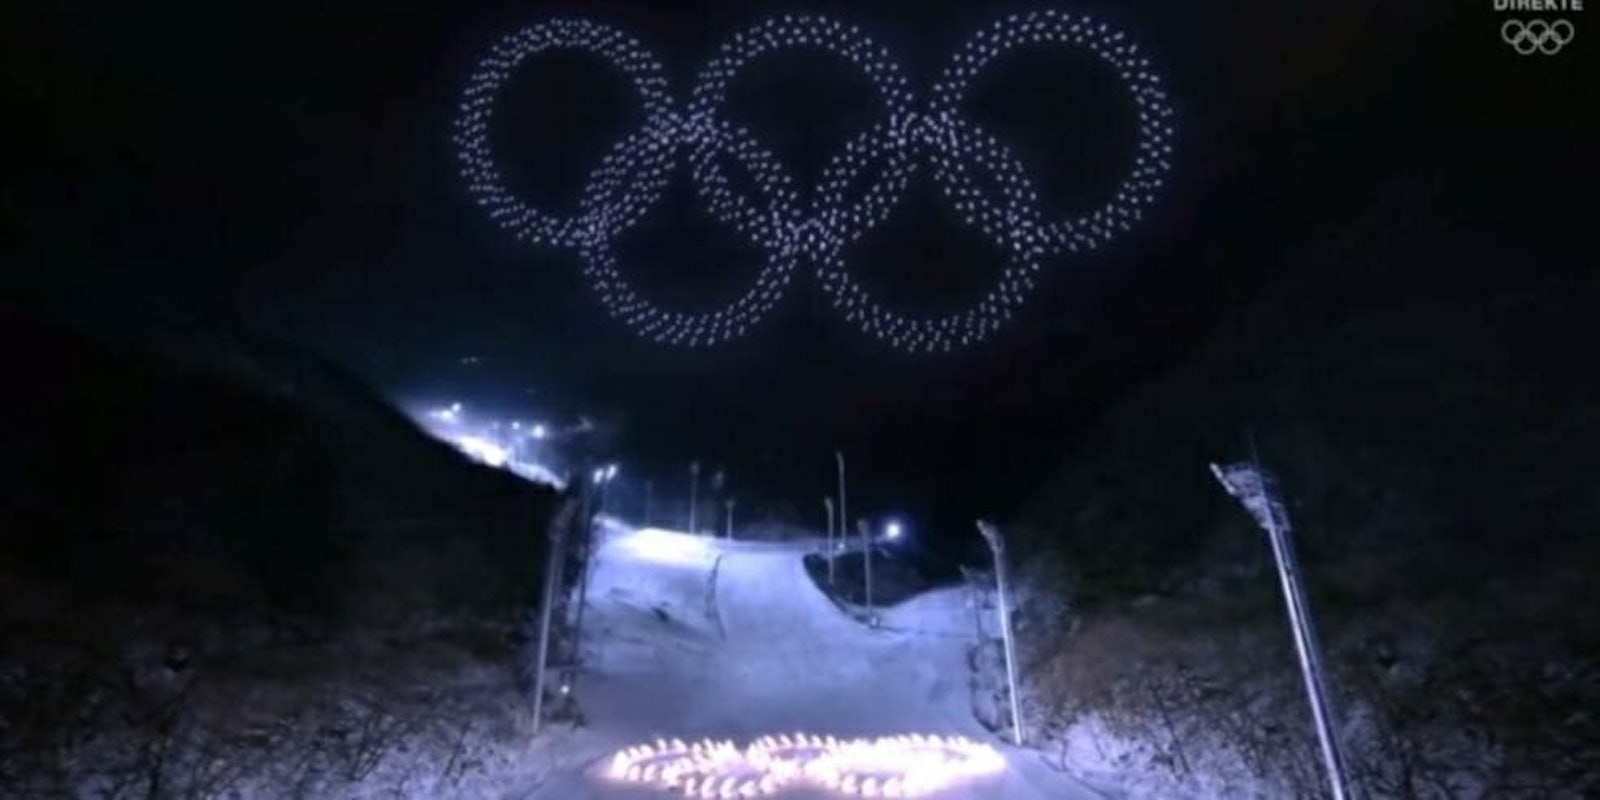 Olympic drones Intel